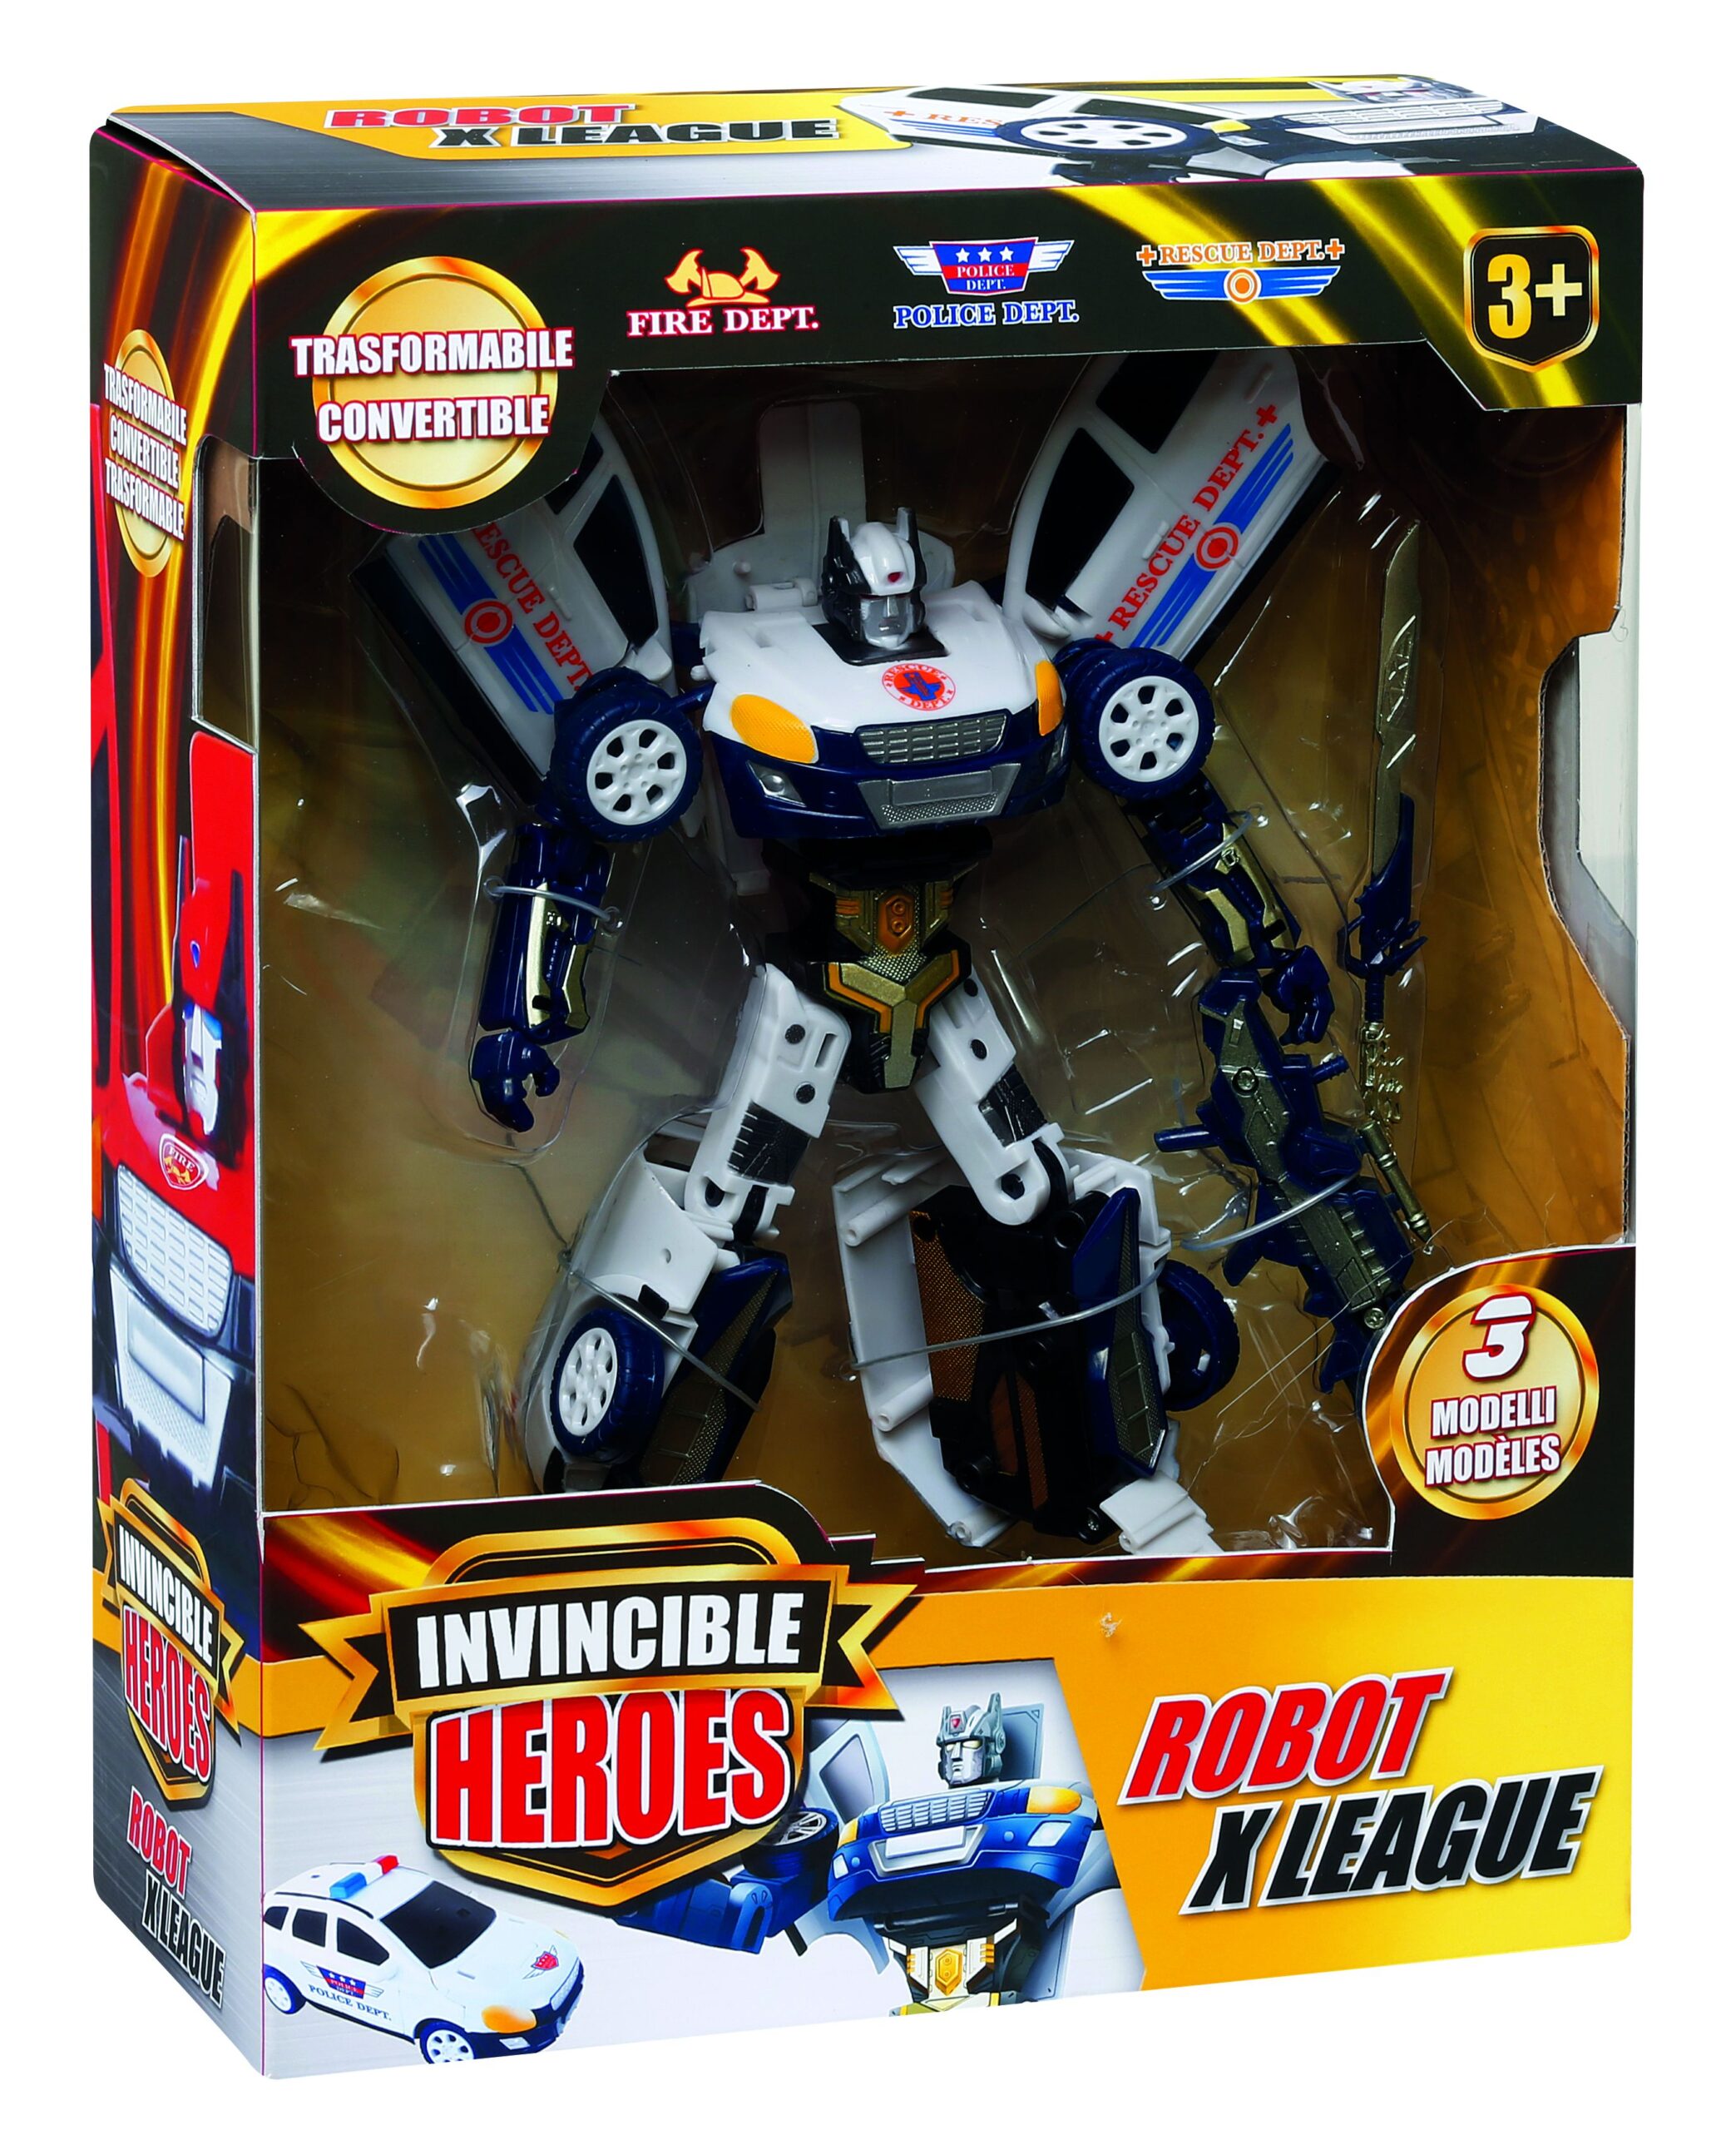 Invincible heroes robot xleague - INVINCIBLE HEROES